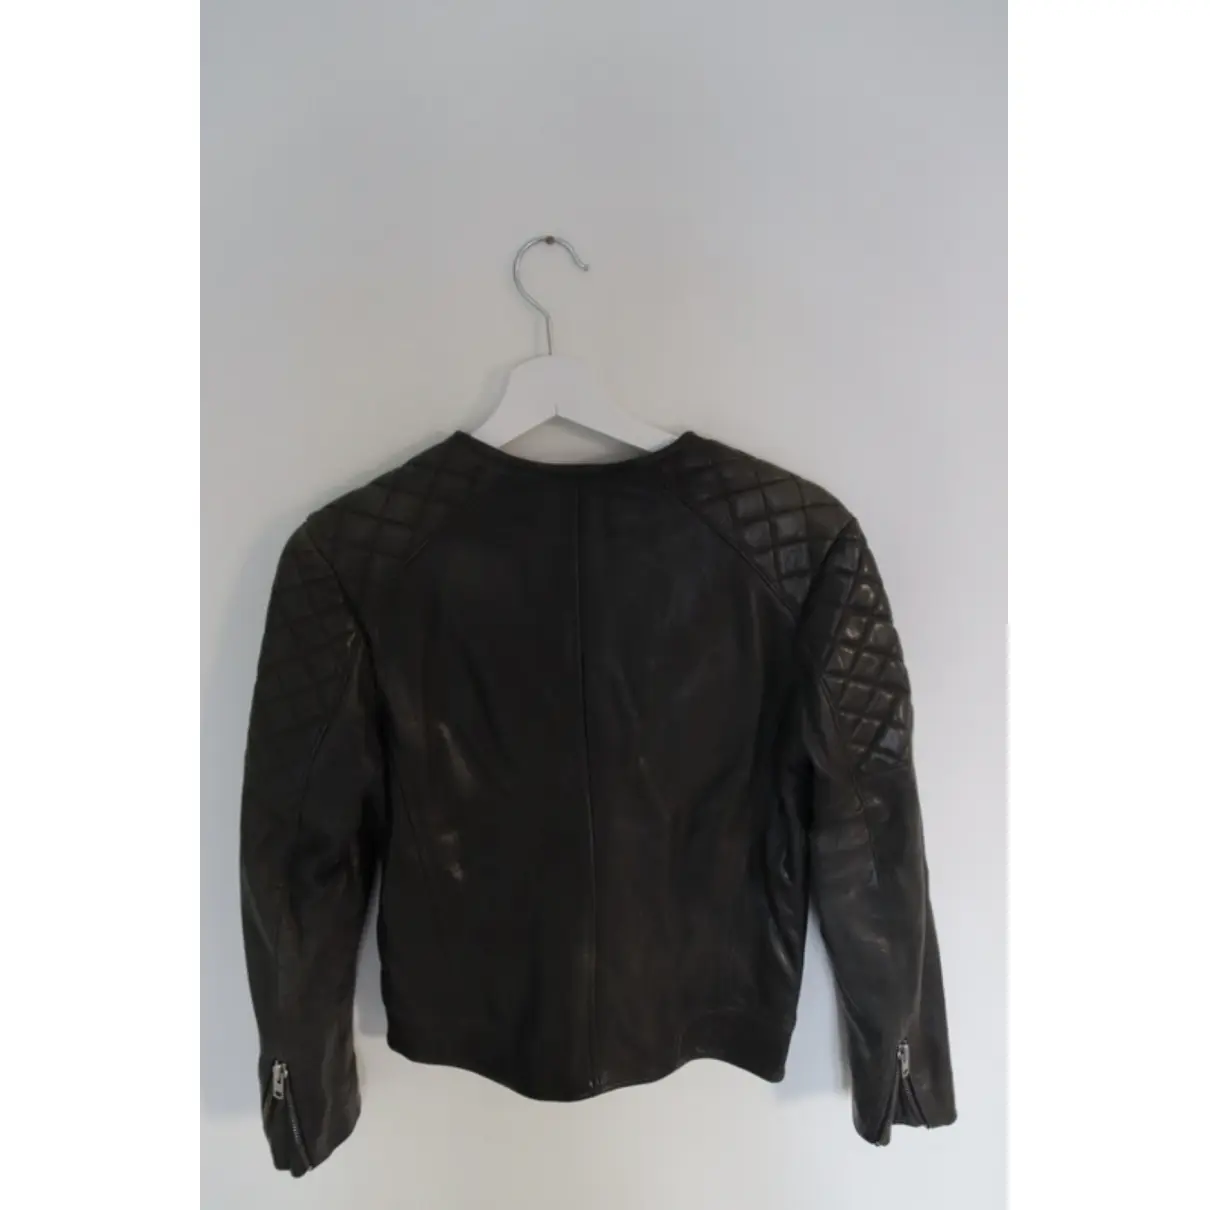 Buy Paul & Joe Sister Leather biker jacket online